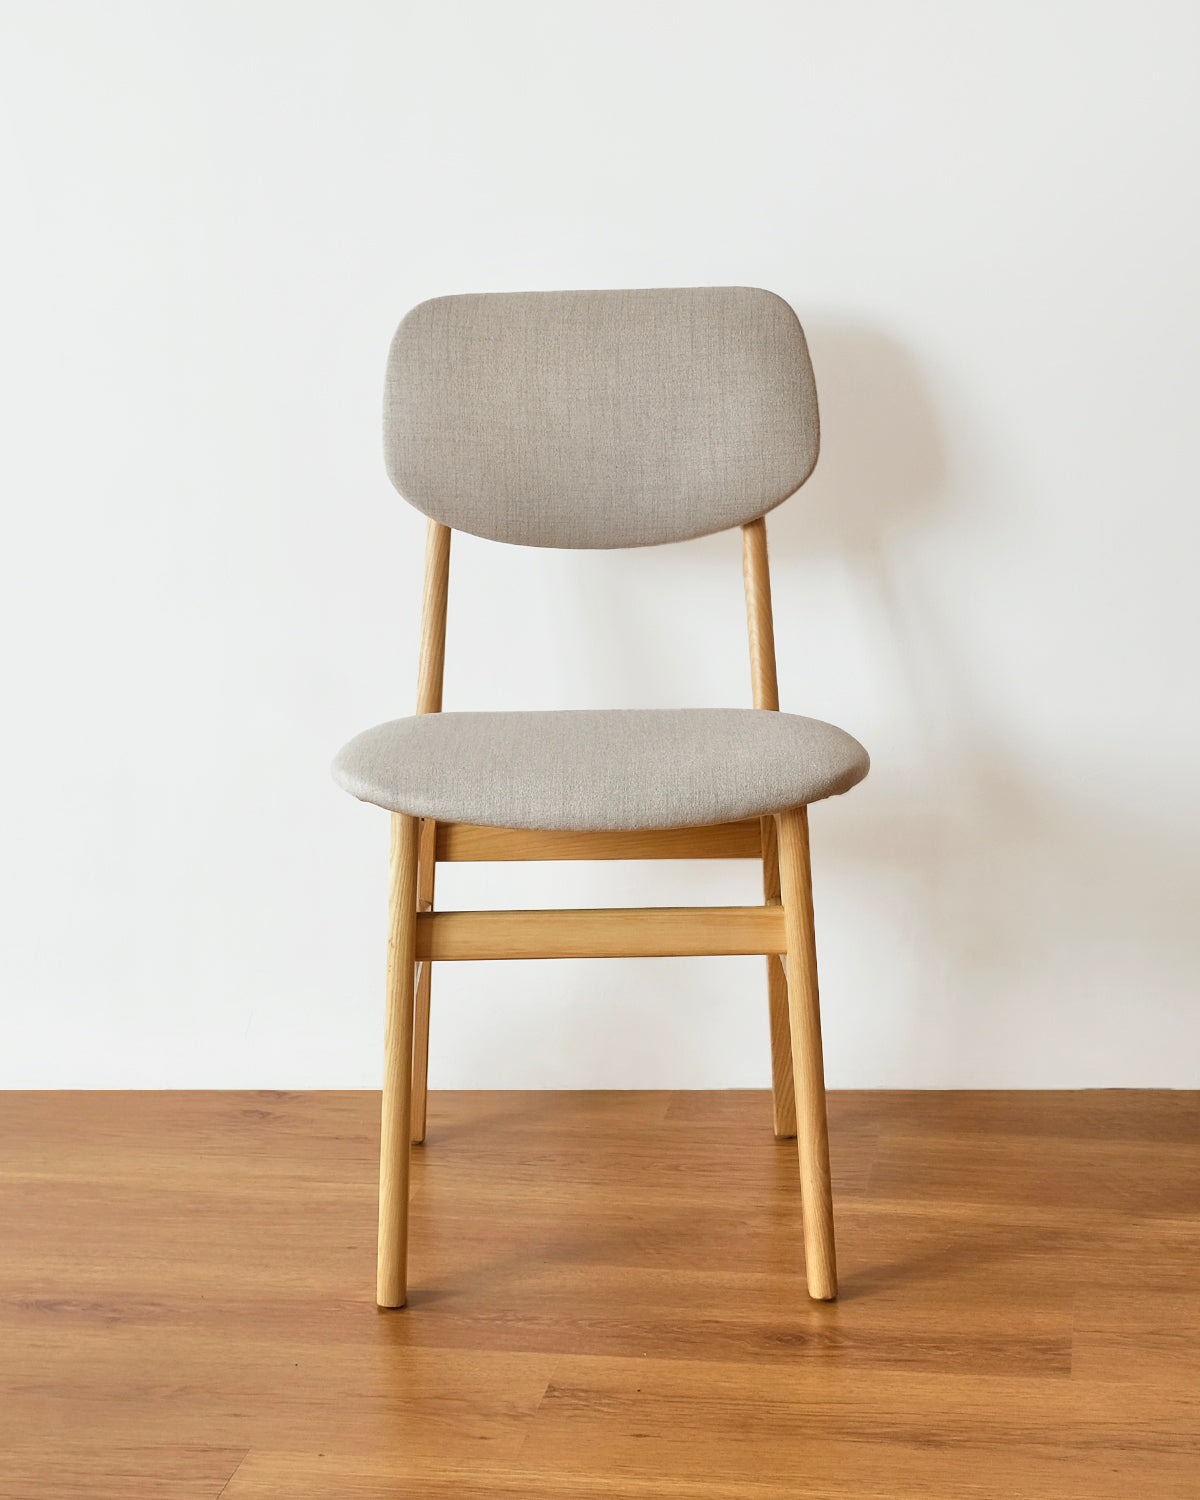 Shin Wood Chair